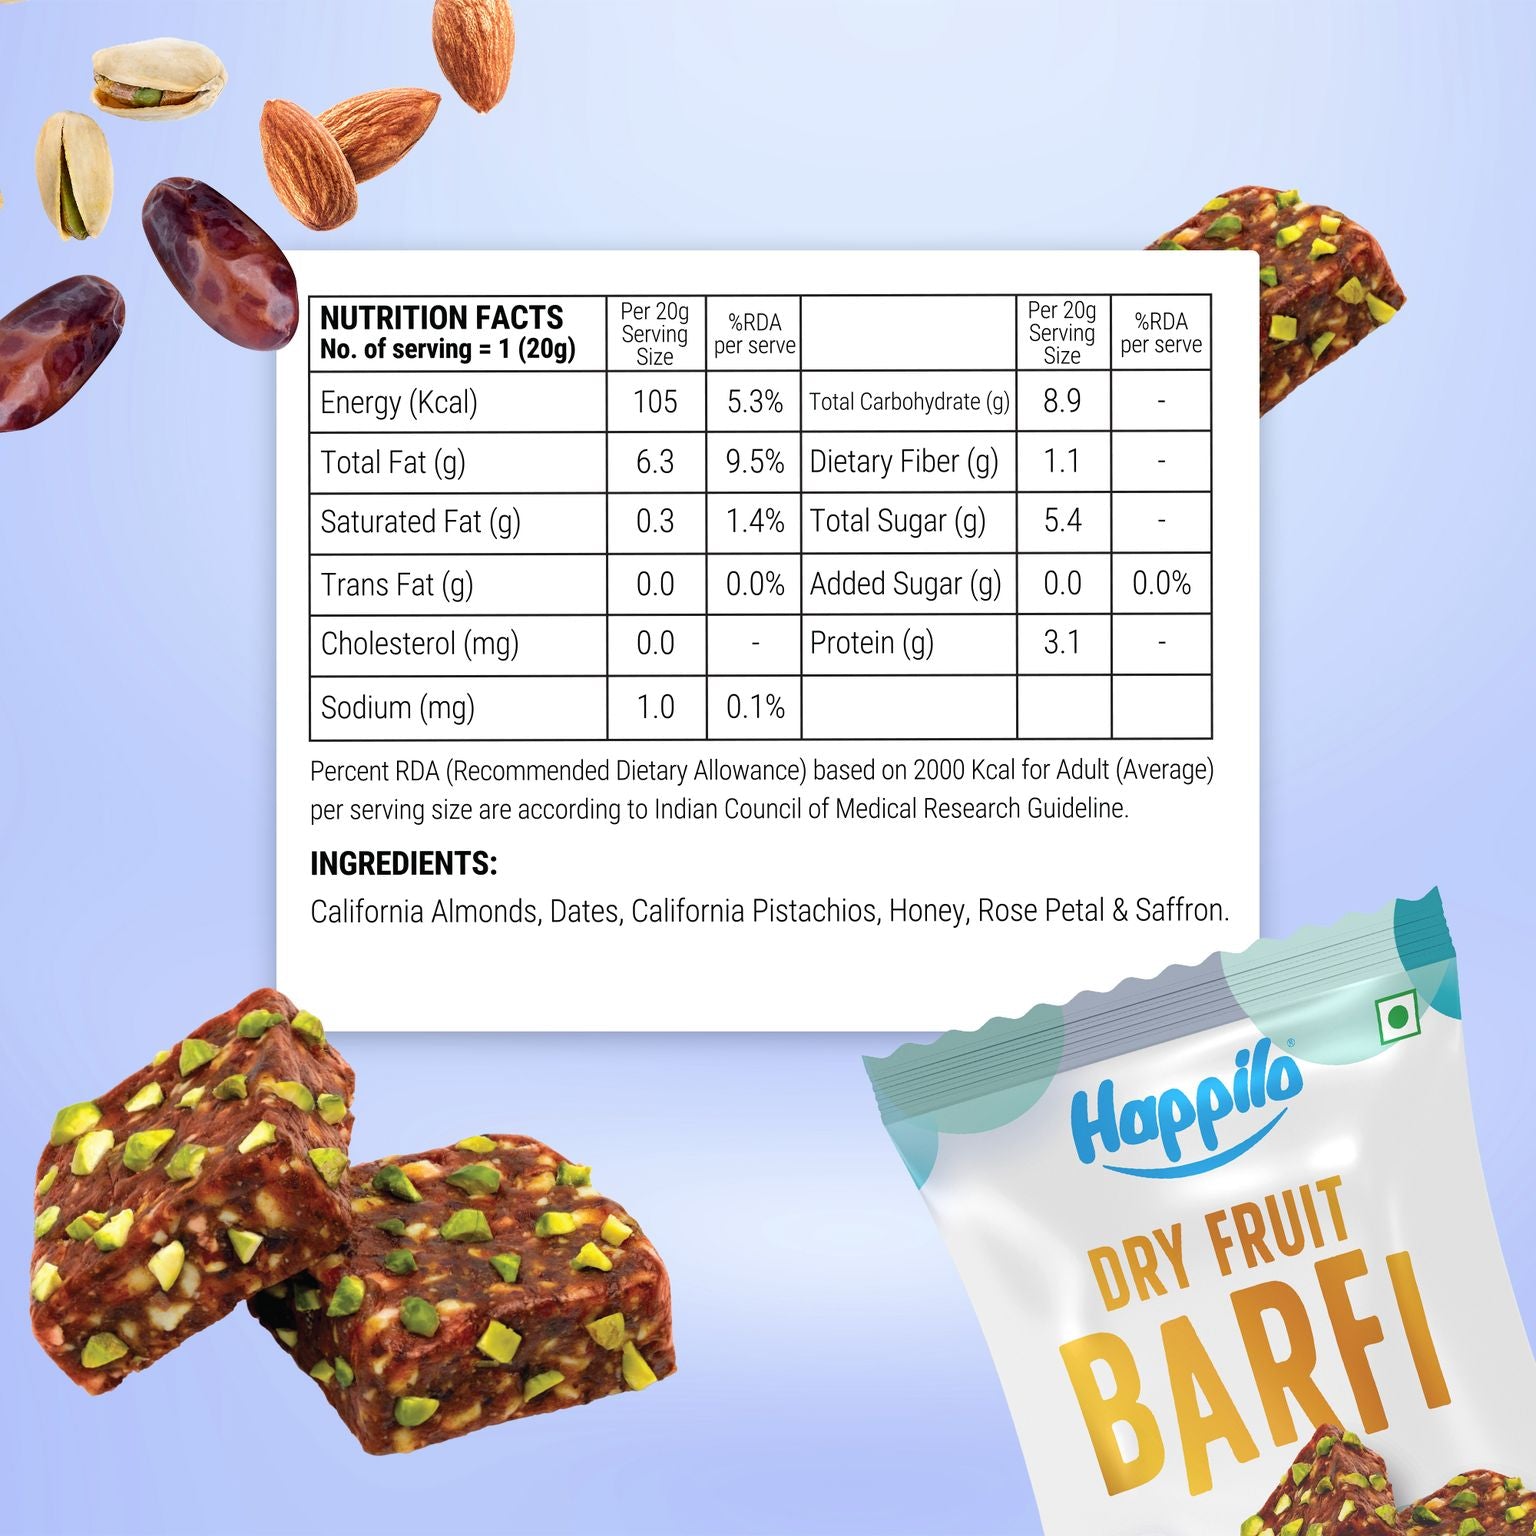 Happilo Premium International Dates Dry Fruit BarFi 20g (Pack of 36)